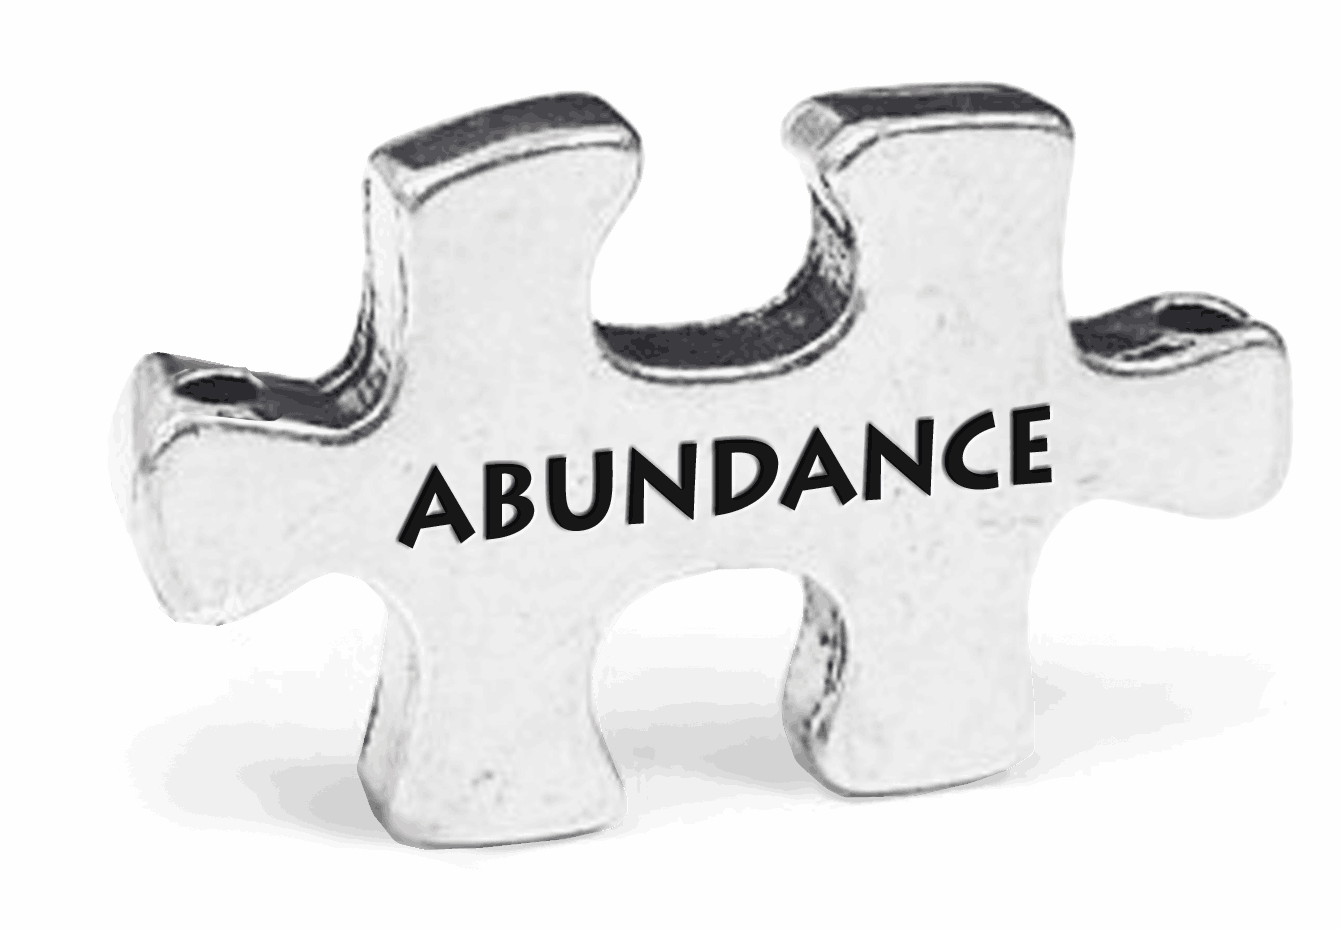 Abundance Puzzle Token on Key Loop